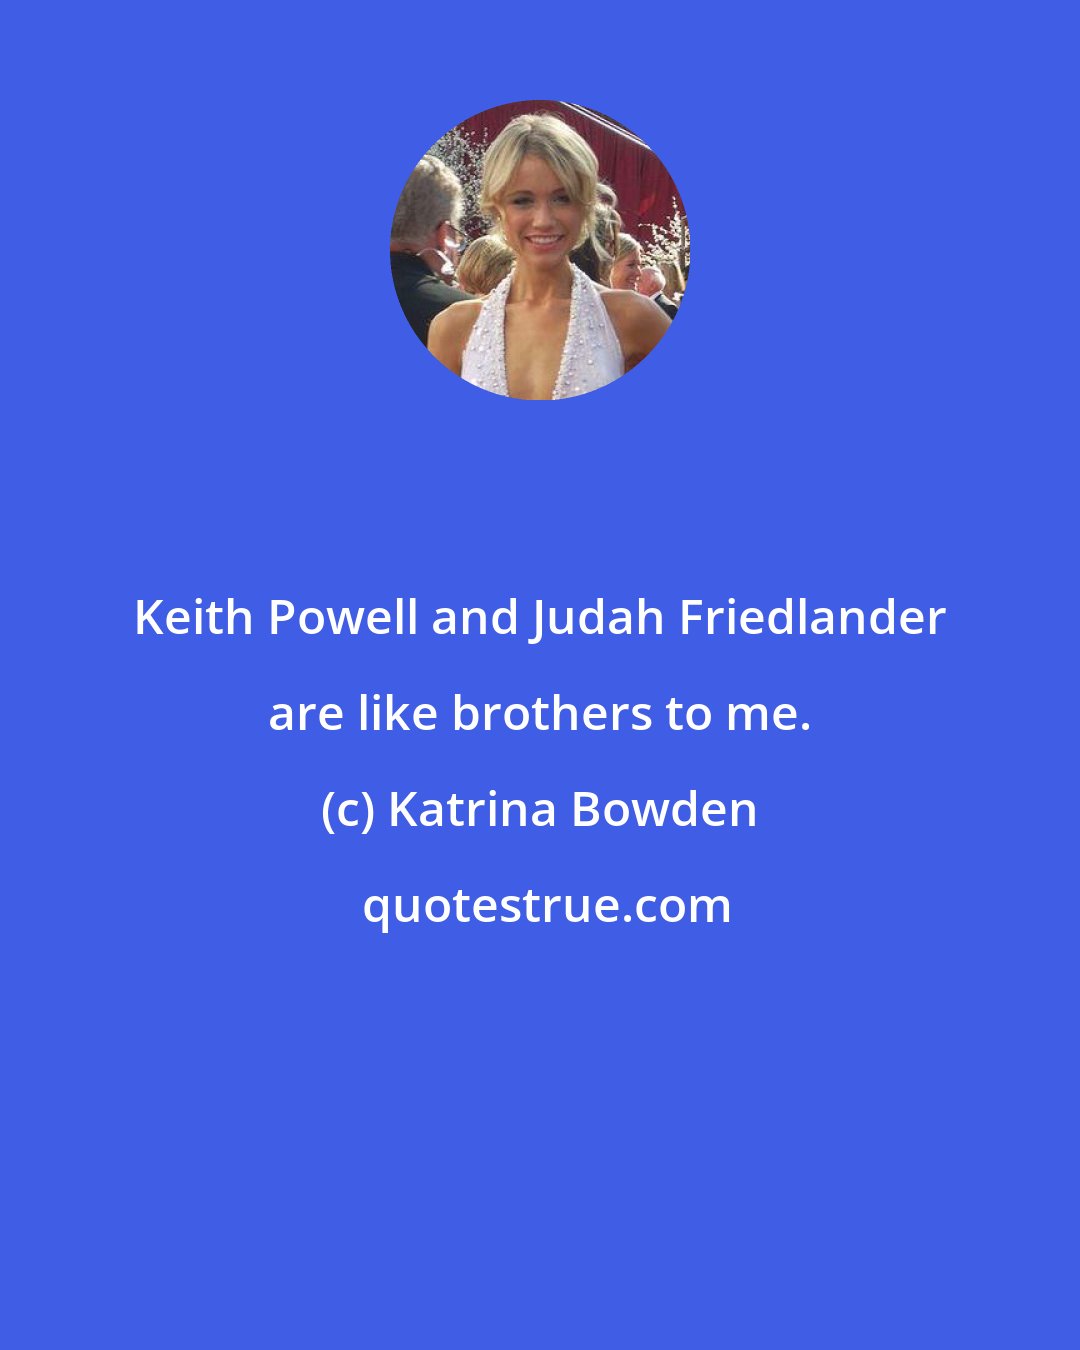 Katrina Bowden: Keith Powell and Judah Friedlander are like brothers to me.